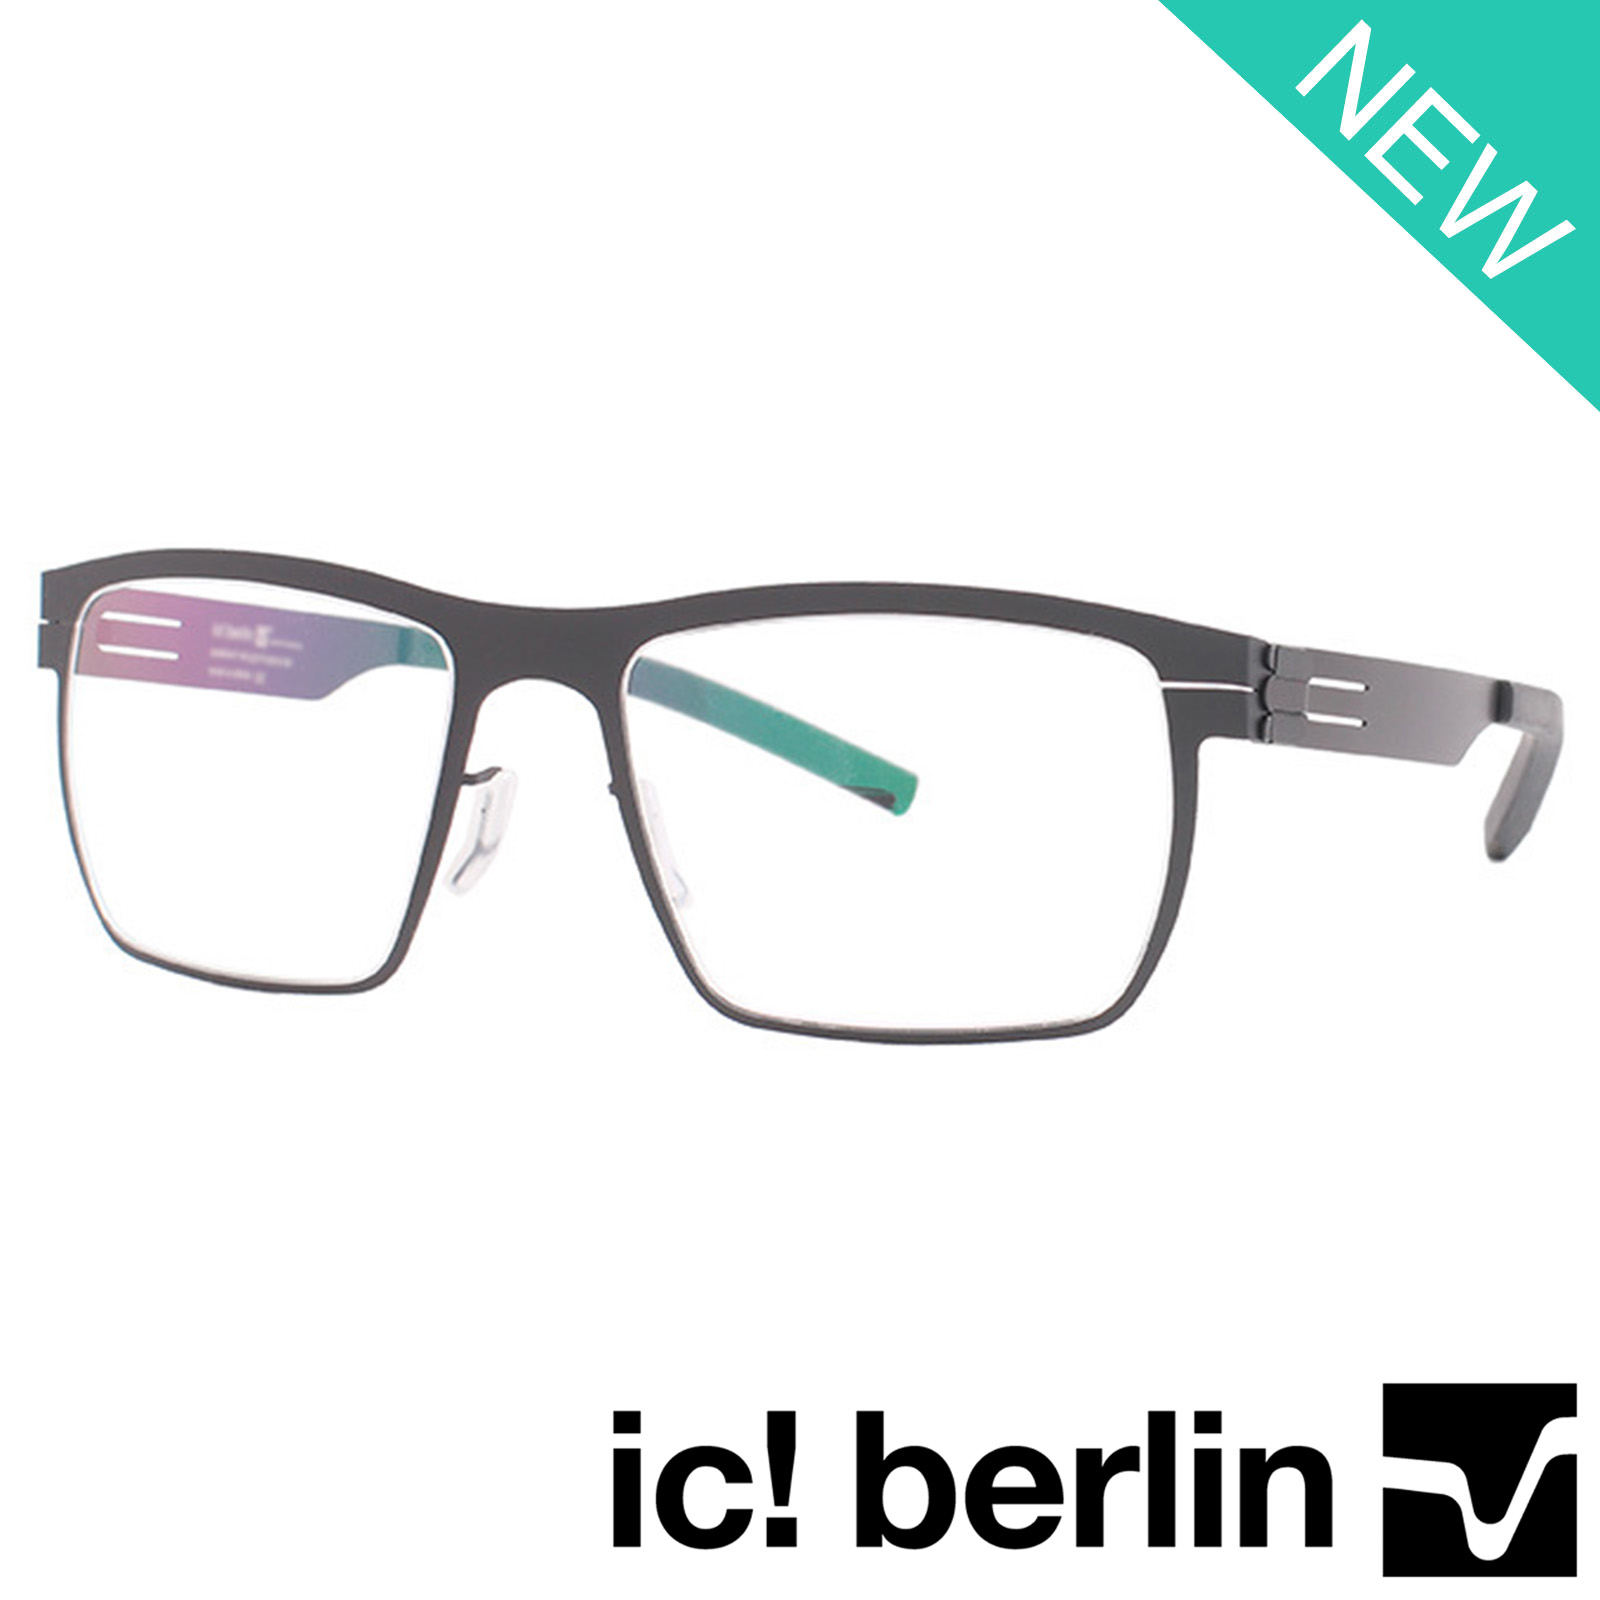 Ic Berlin แว่นตา รุ่น 038 C-2 สีเทา กรอบเต็ม Rectangle ทรงสี่เหลี่ยมผืนผ้า ขาข้อต่อ วัสดุ สแตนเลส สตีล (สำหรับตัดเลนส์) กรอบแว่นตา สวมใส่สบาย น้ำหนักเบา มีความแข็งแรงทนทาน Full frame Eyeglass leg joints Stainless Steel material Eyewear Top Glasses